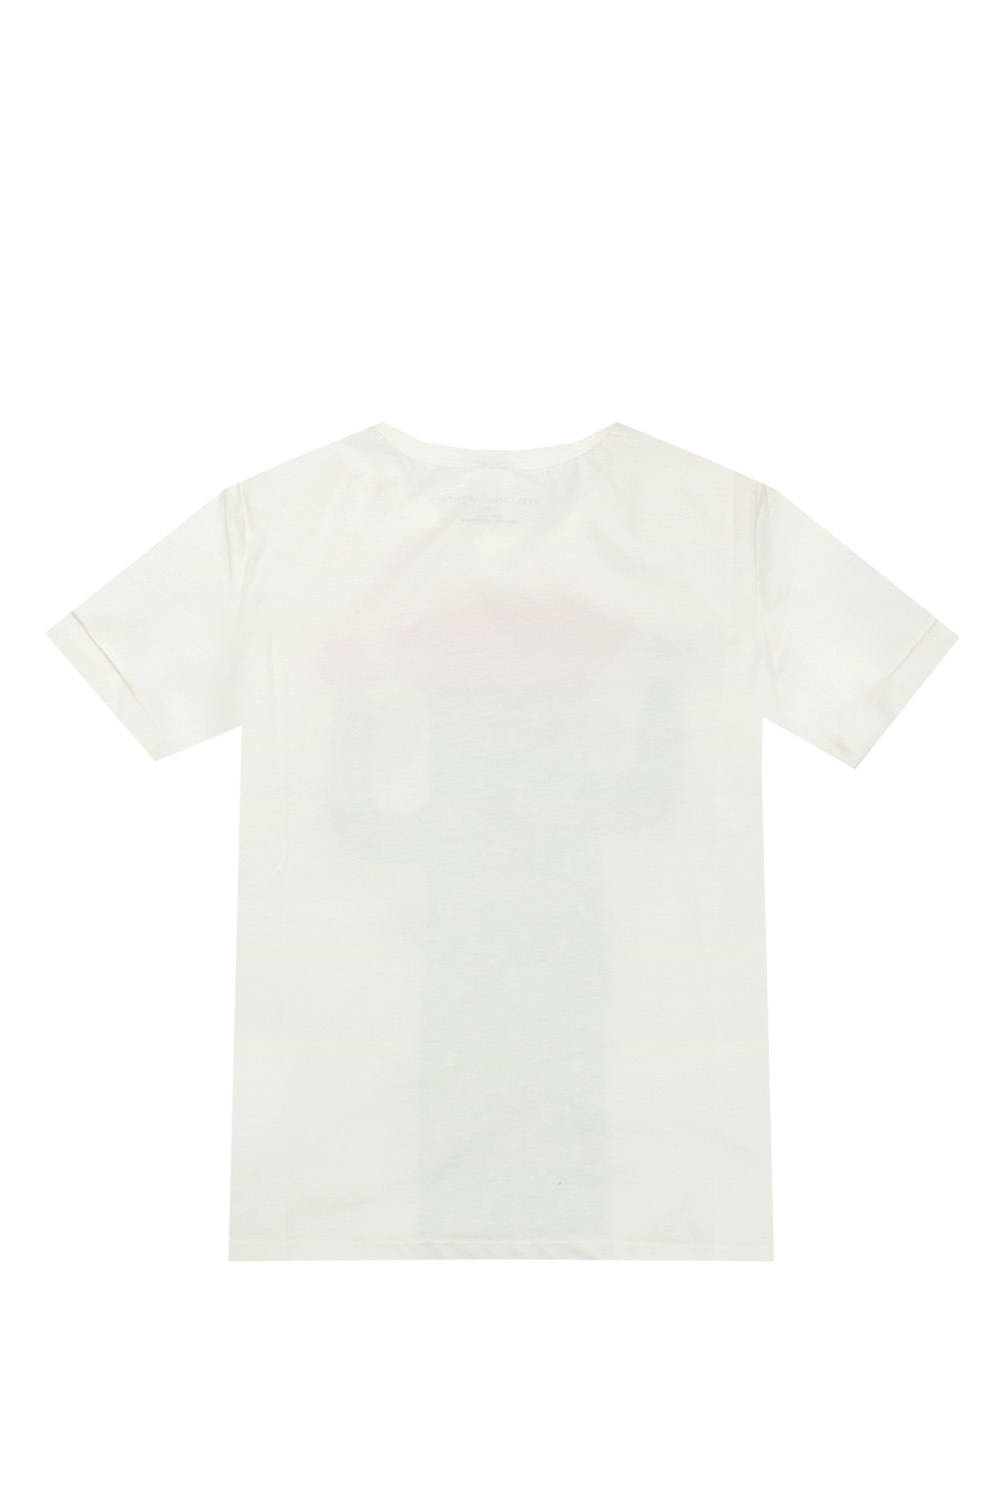 Stella McCartney Kids T-shirt with floral-motif